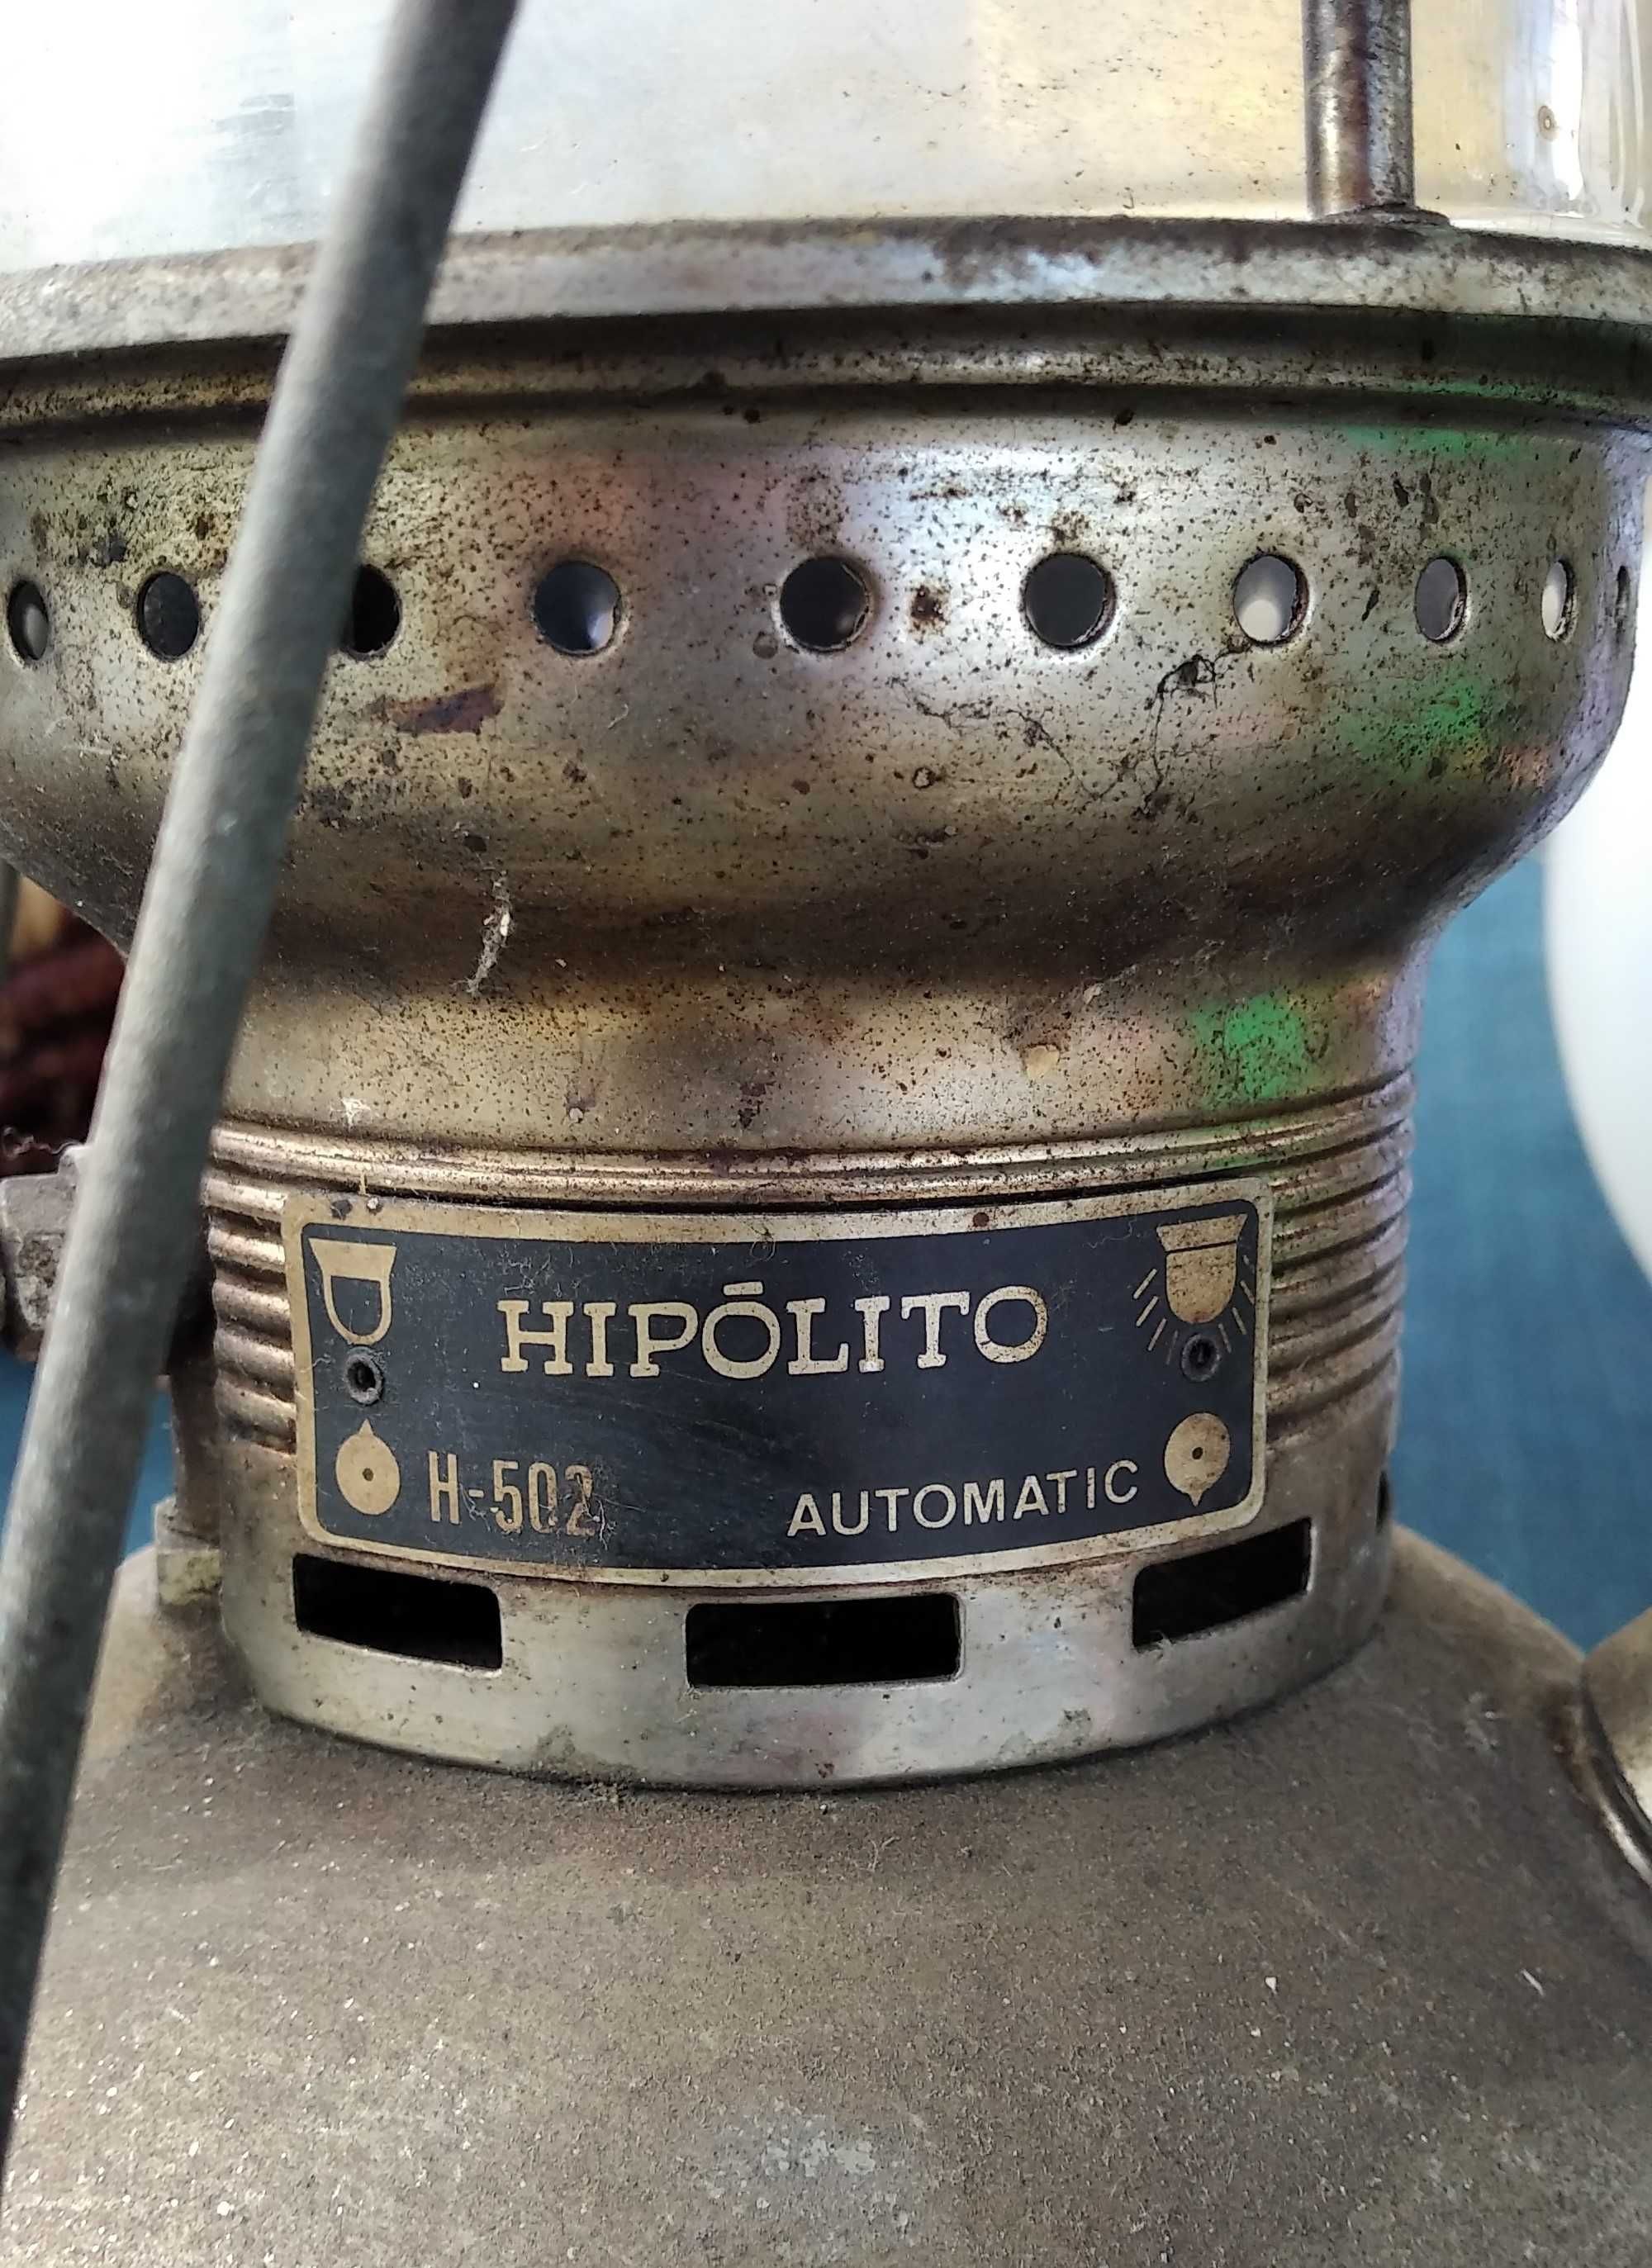 Hipólito H 502 Automatic (Petromax)